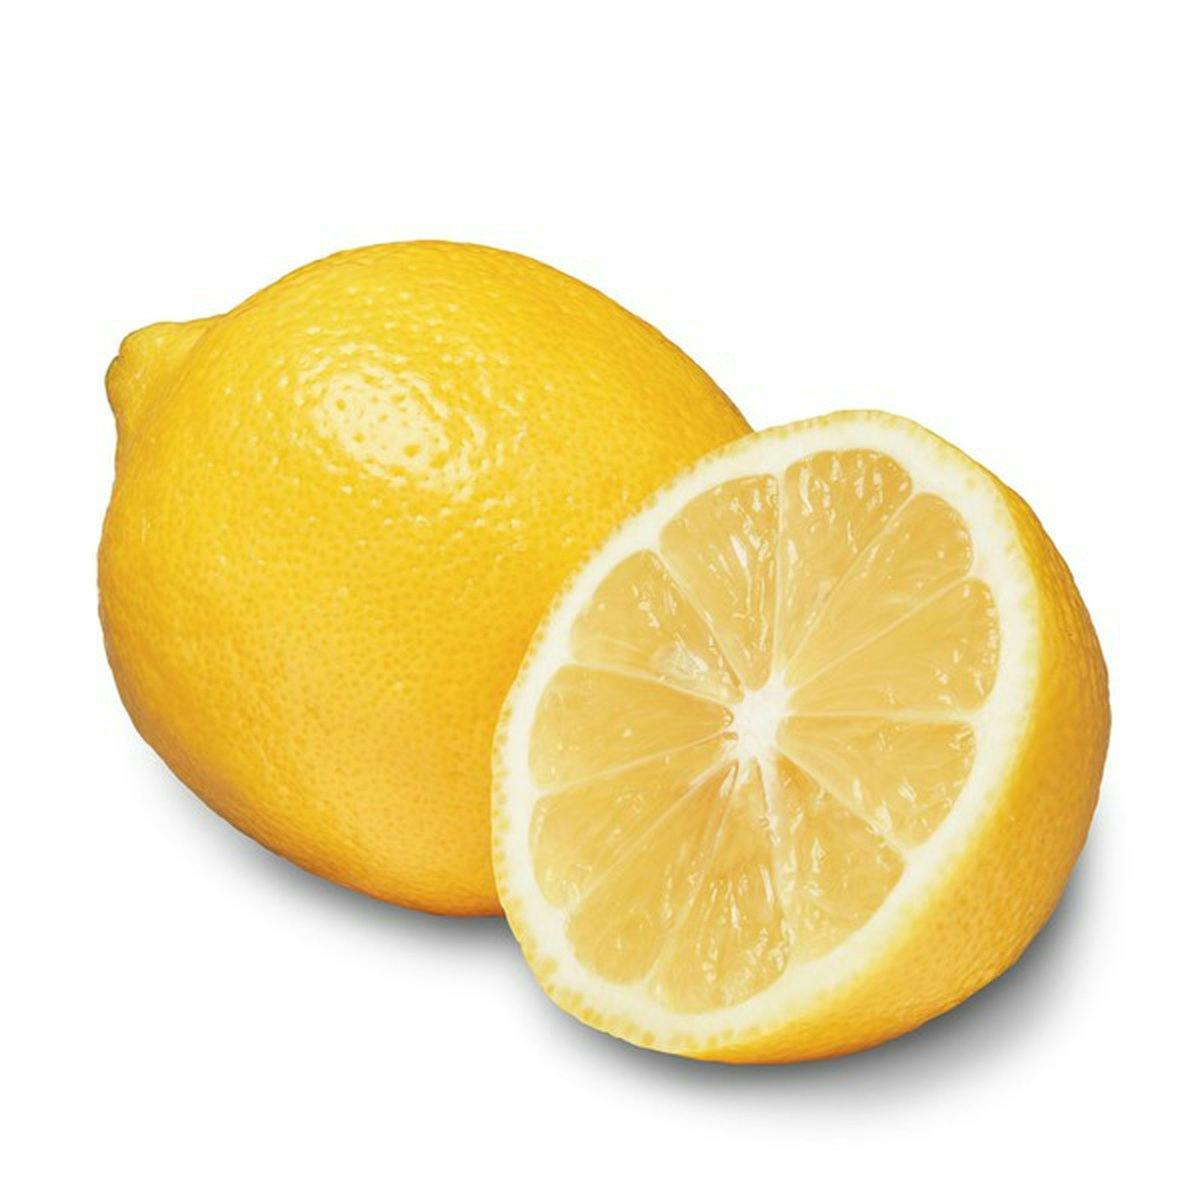 lemon juice and zest to taste